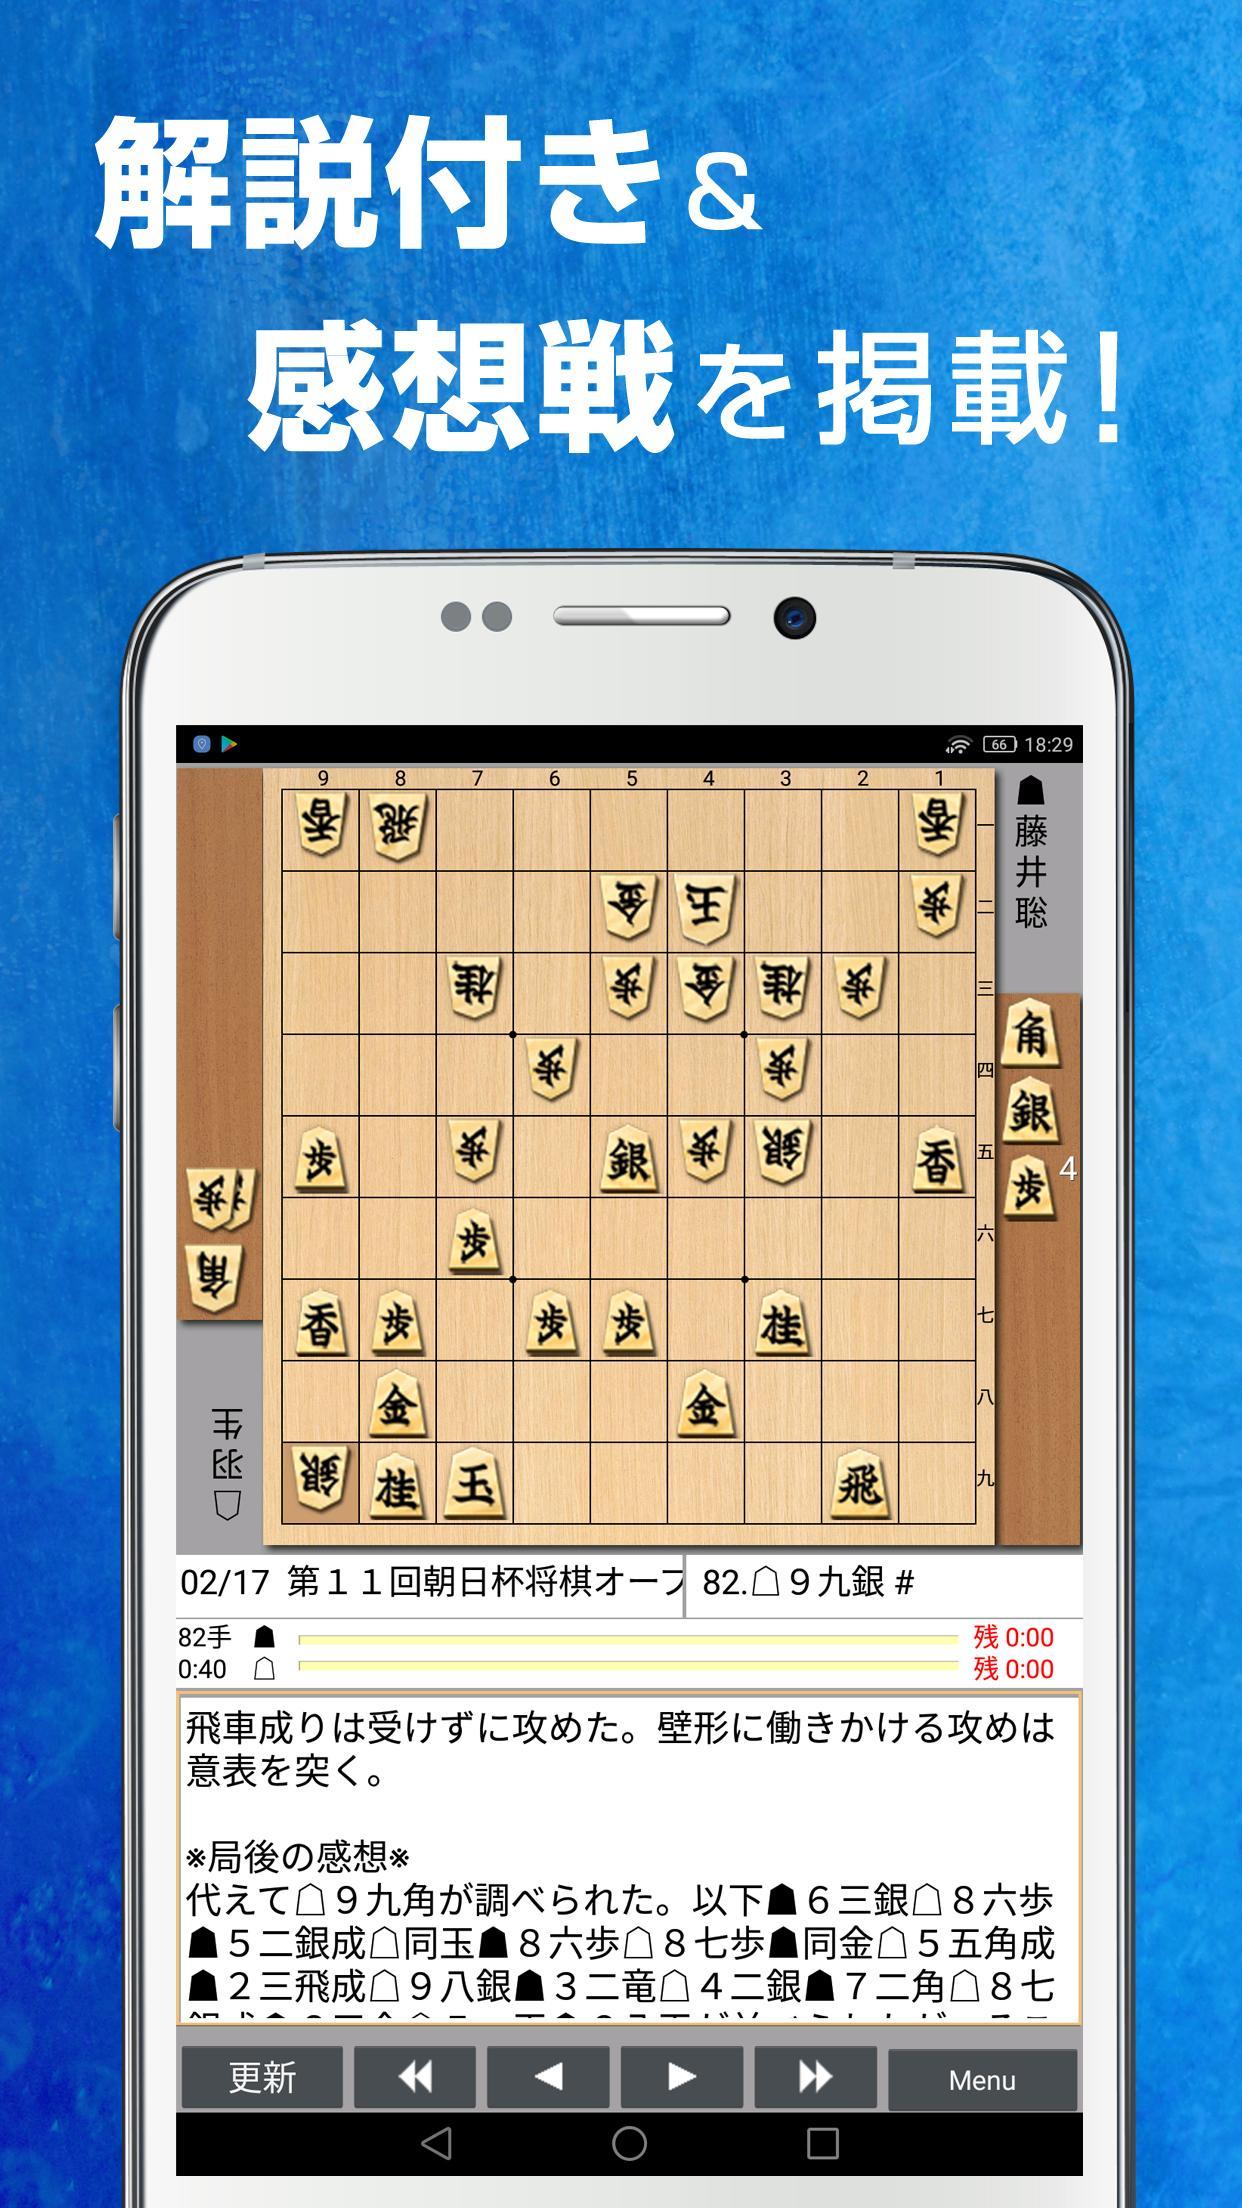 Shogi Live Subscription 2014 7.17 Screenshot 7